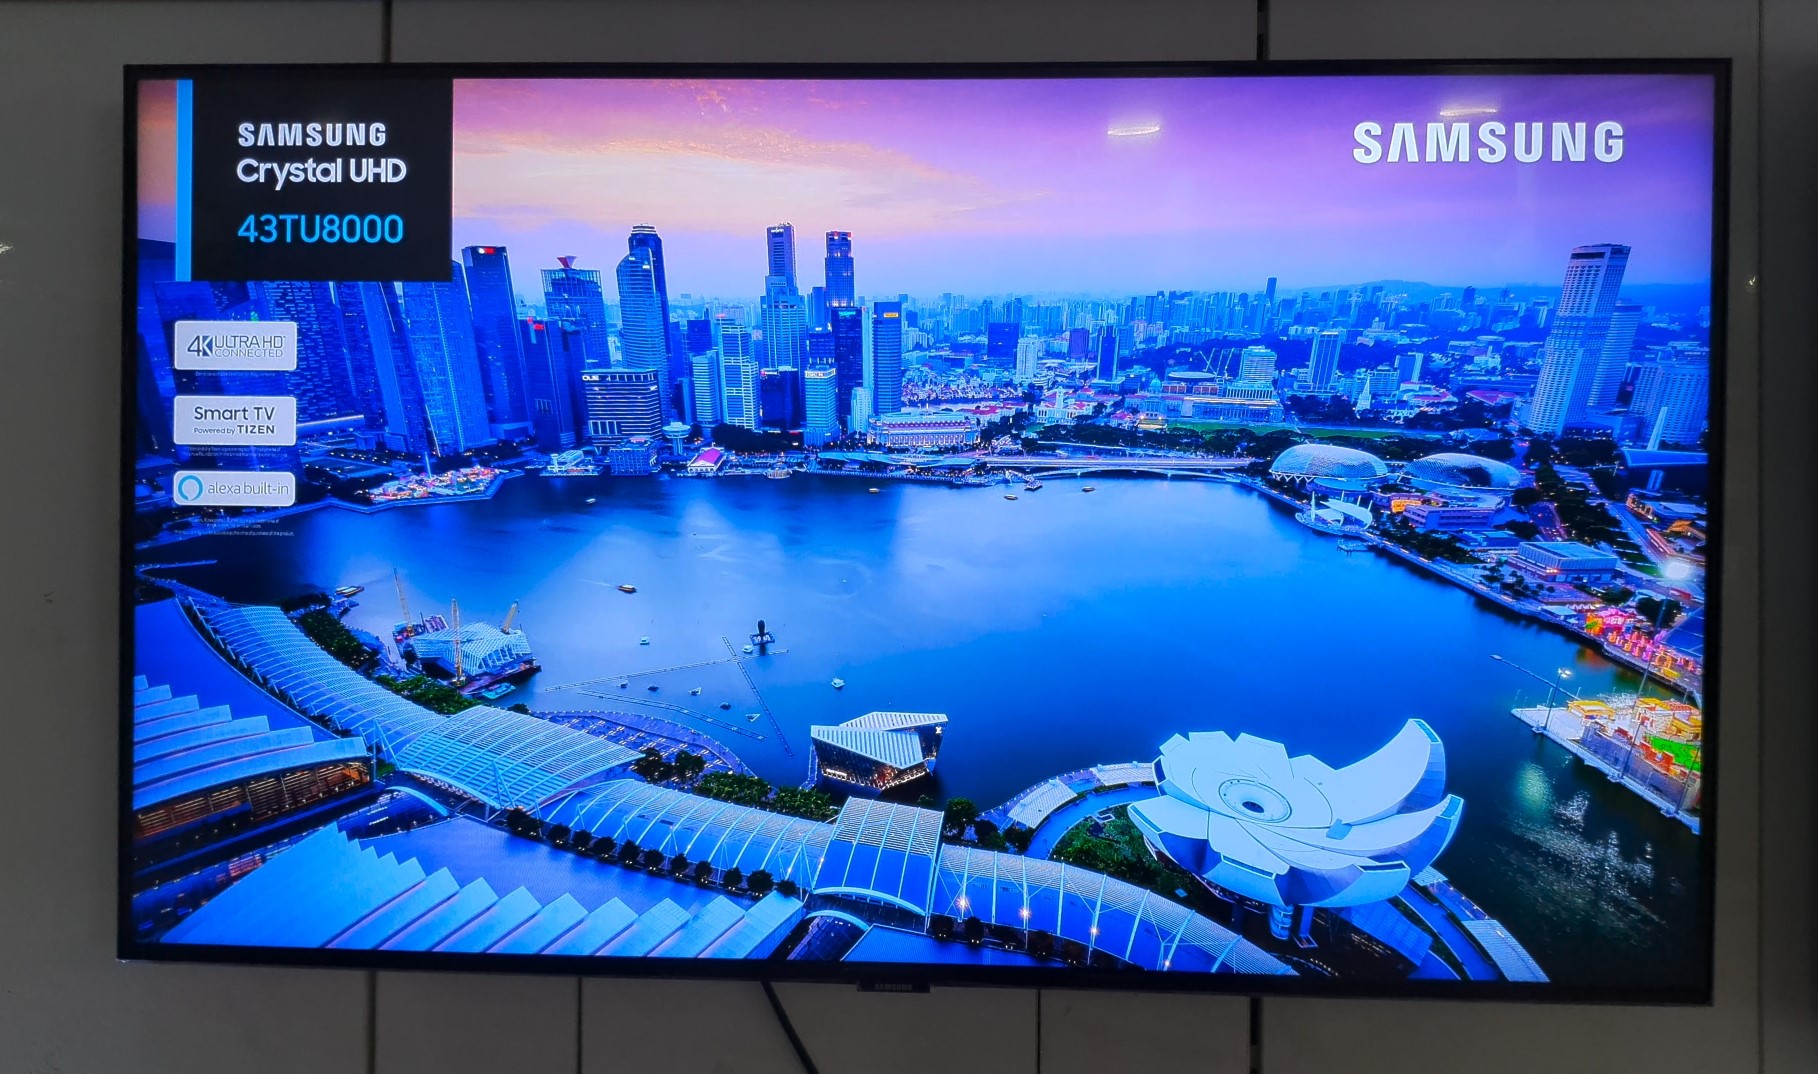 Samsung TU8000 Crystal UHD 4k Smart TV 2020 | An In-Depth Review